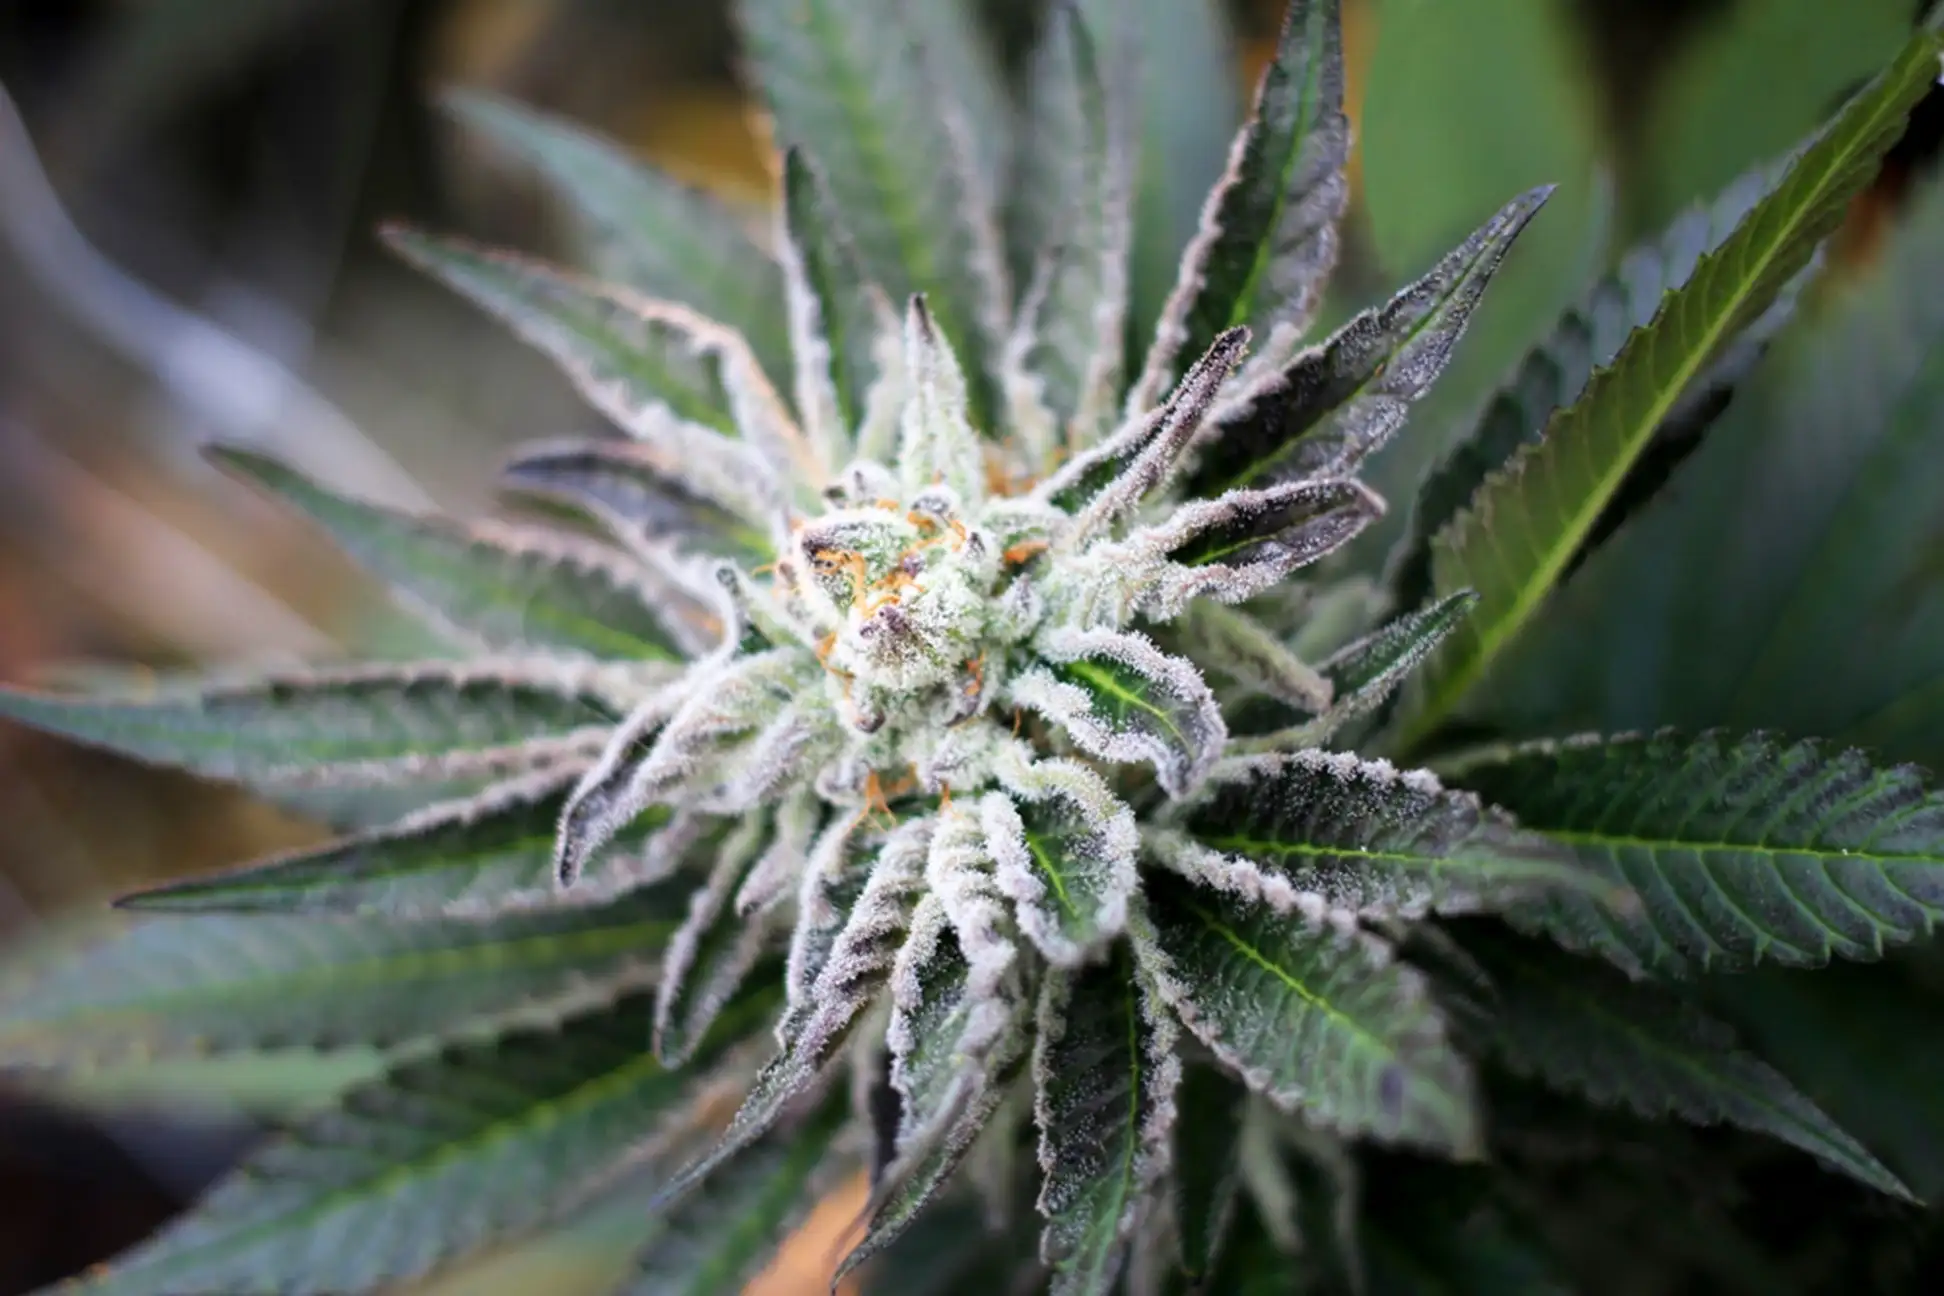 A close up of a marijuana plant